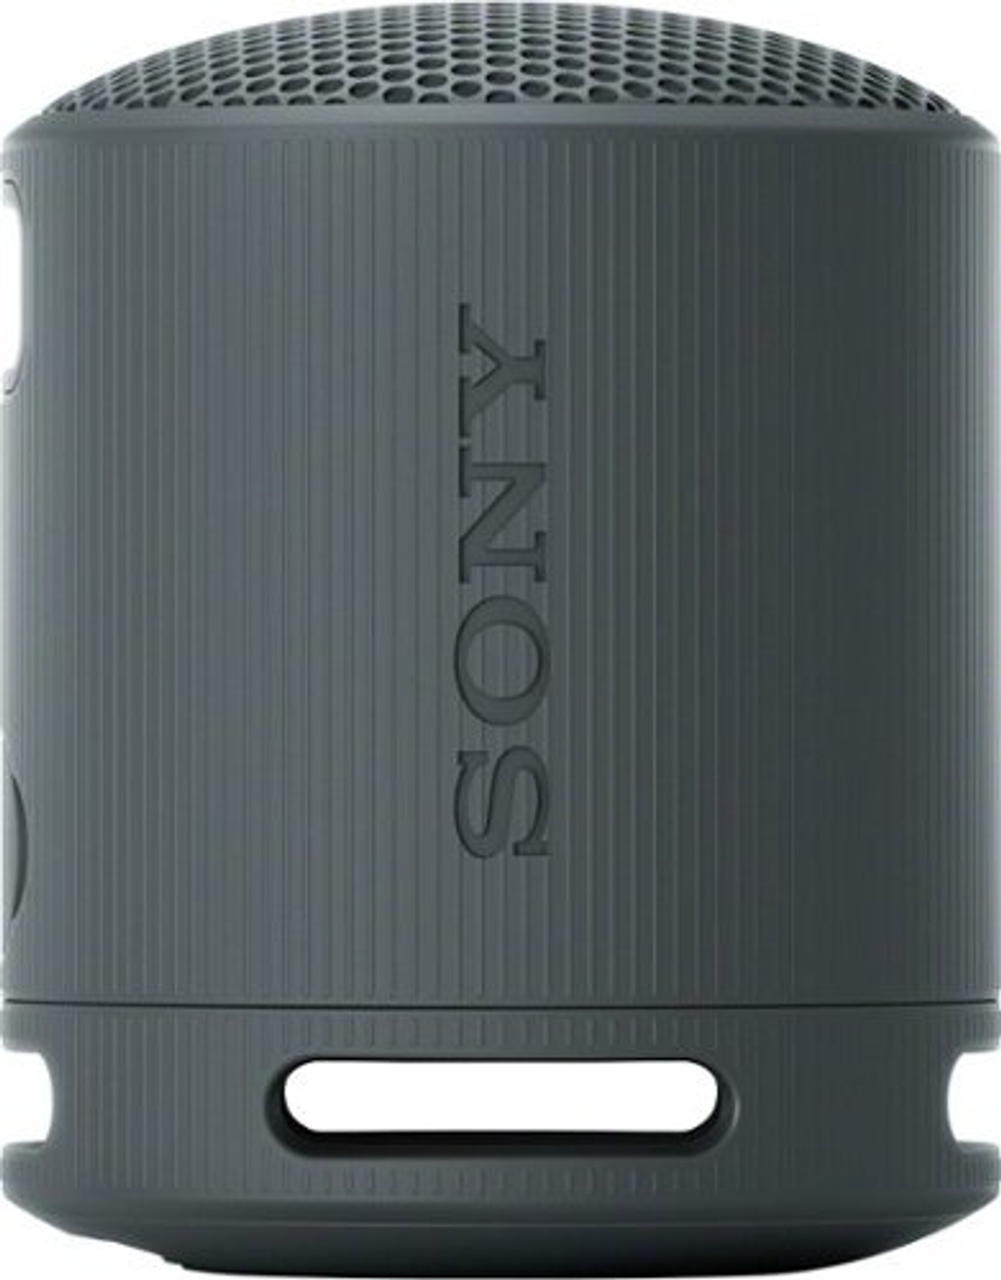 Sony - XB100/B Compact Bluetooth Speaker - Black